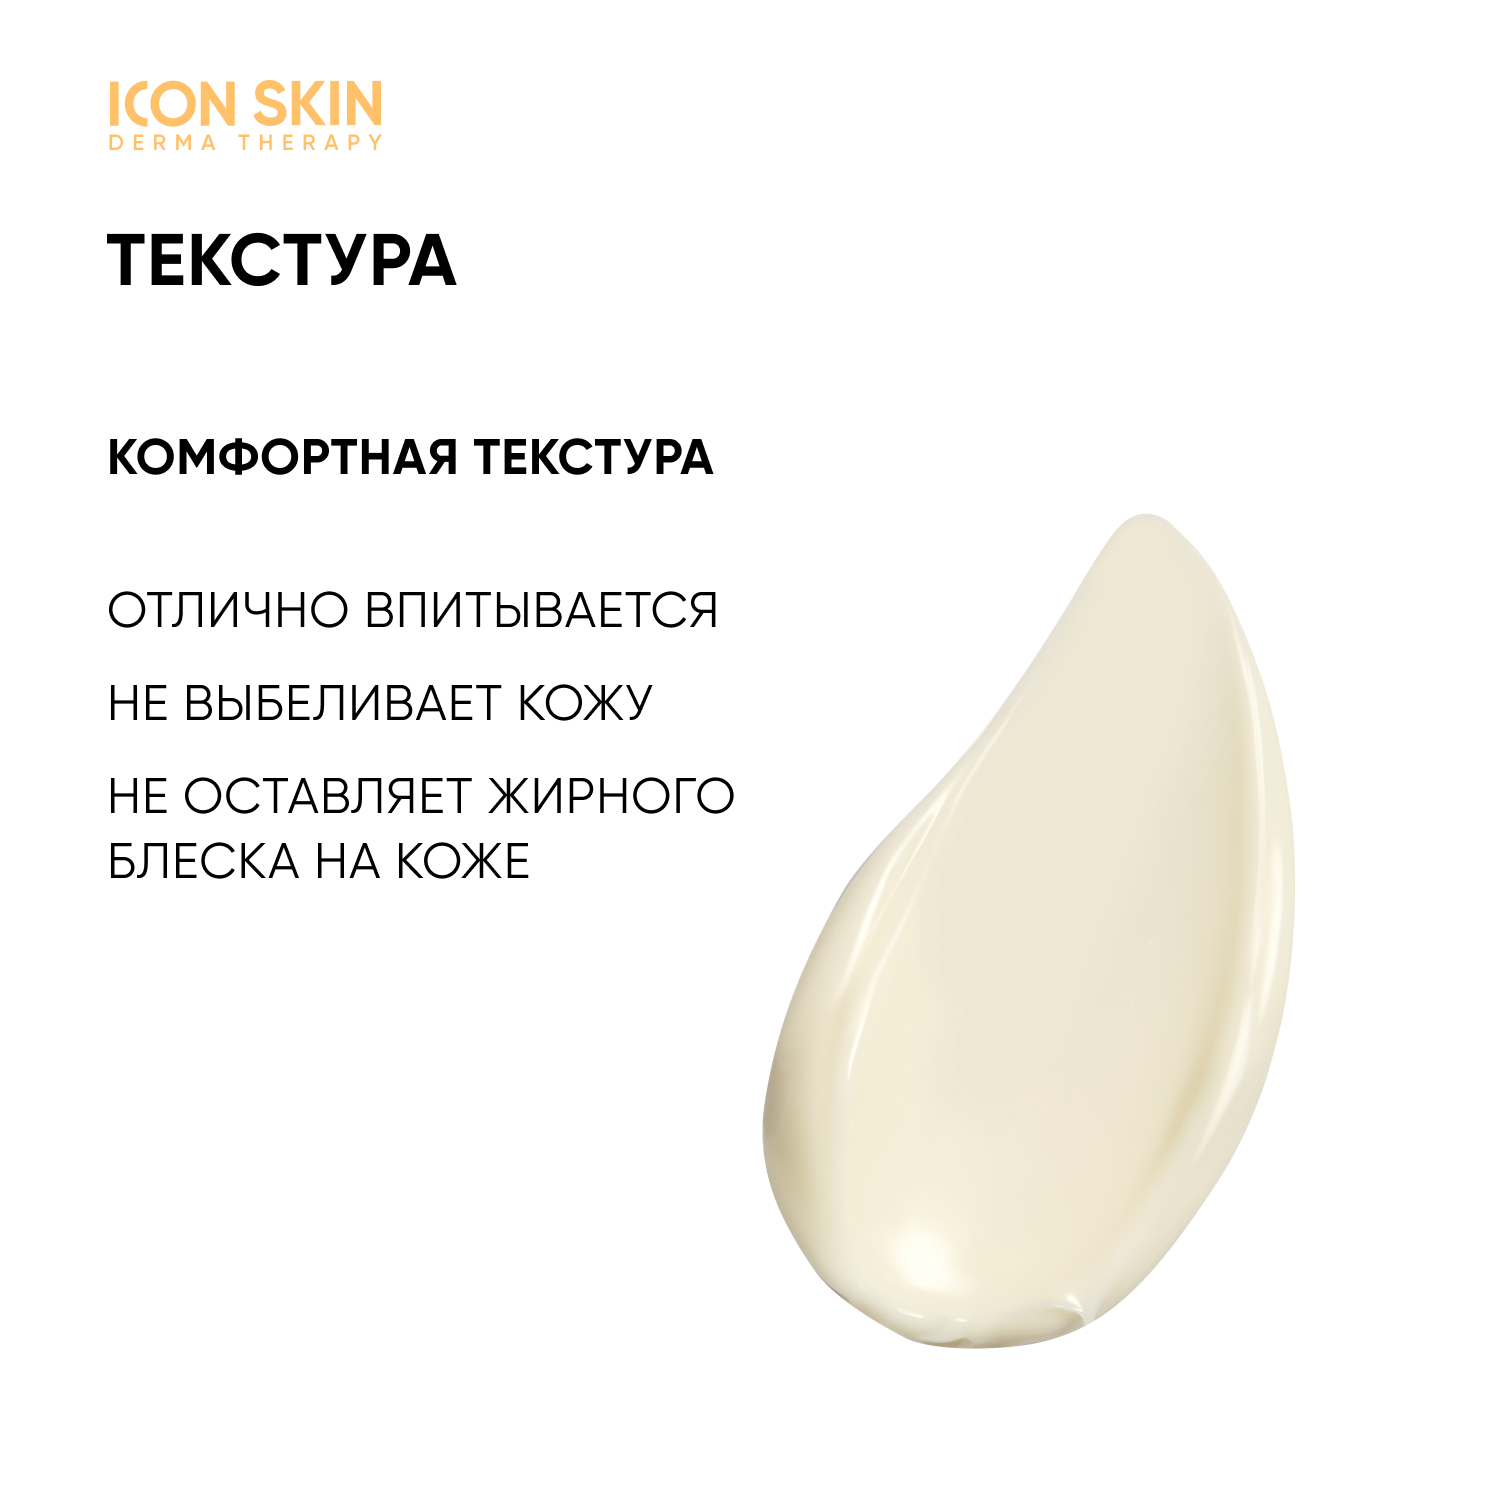 Солнцезащитный крем для лица ICON SKIN SPF 50 увлажняющий для всех типов кожи 50 мл - фото 5